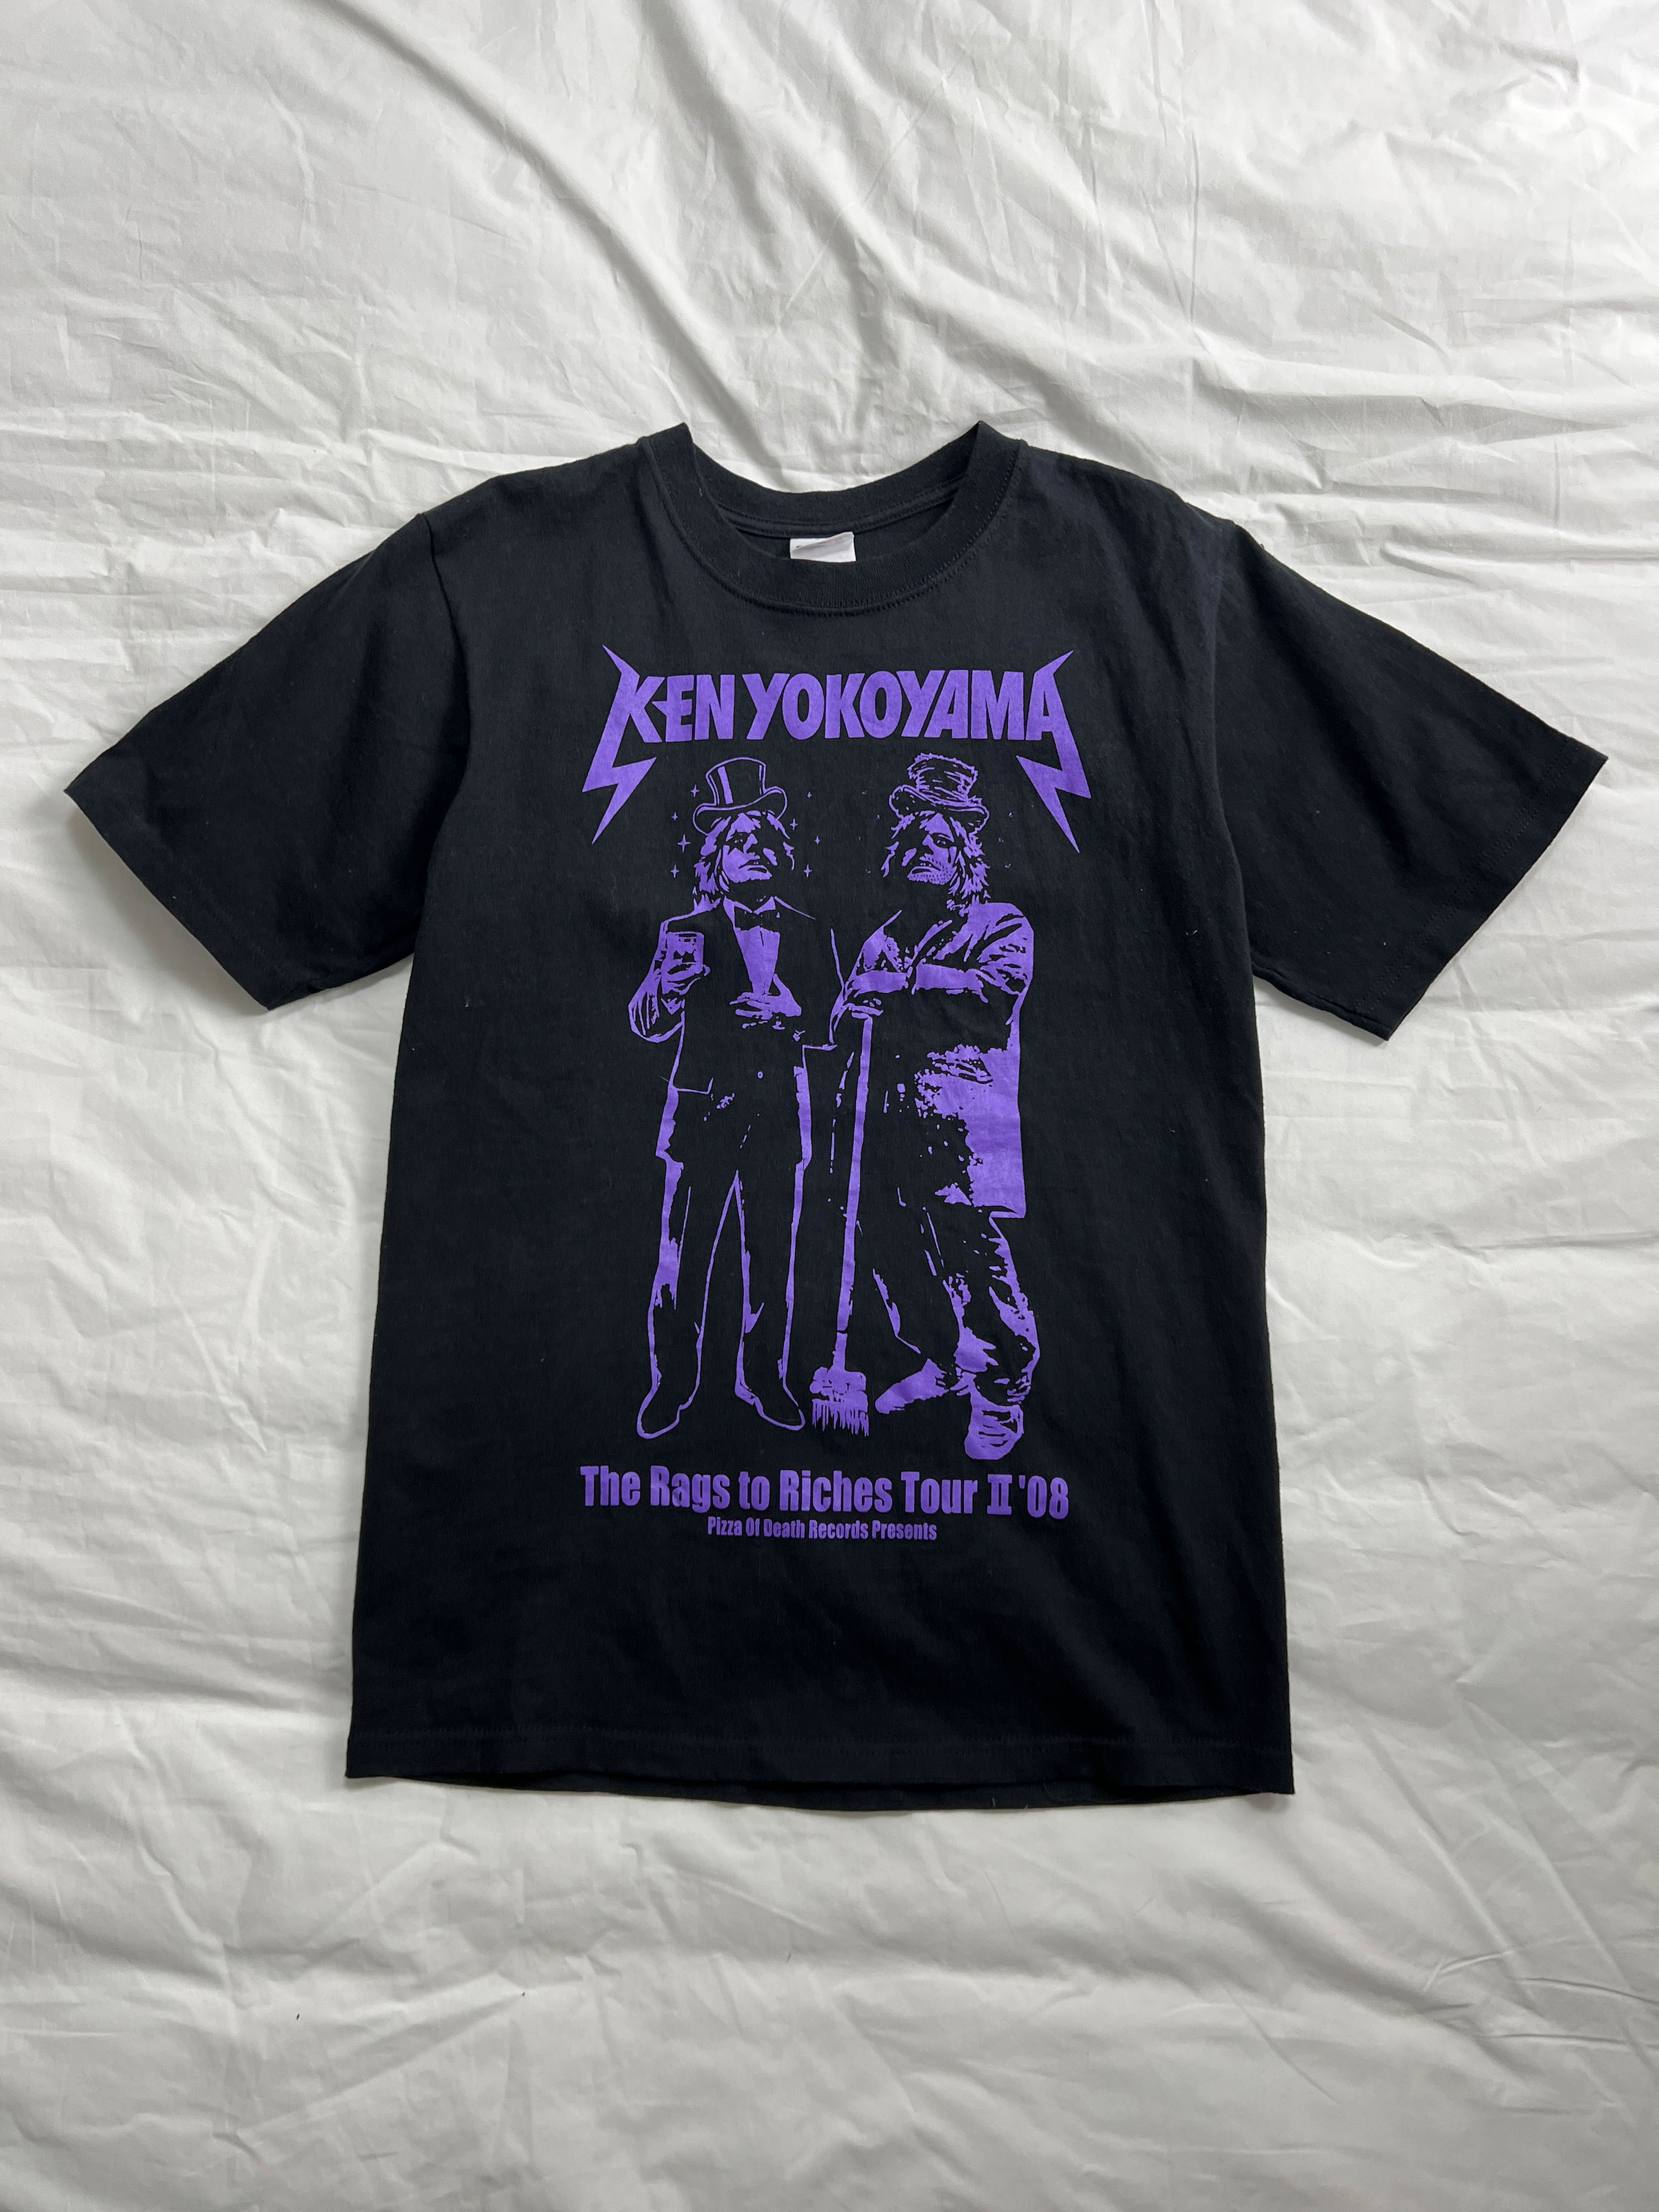 KEN YOKOYAMA 08 tour t-shirts